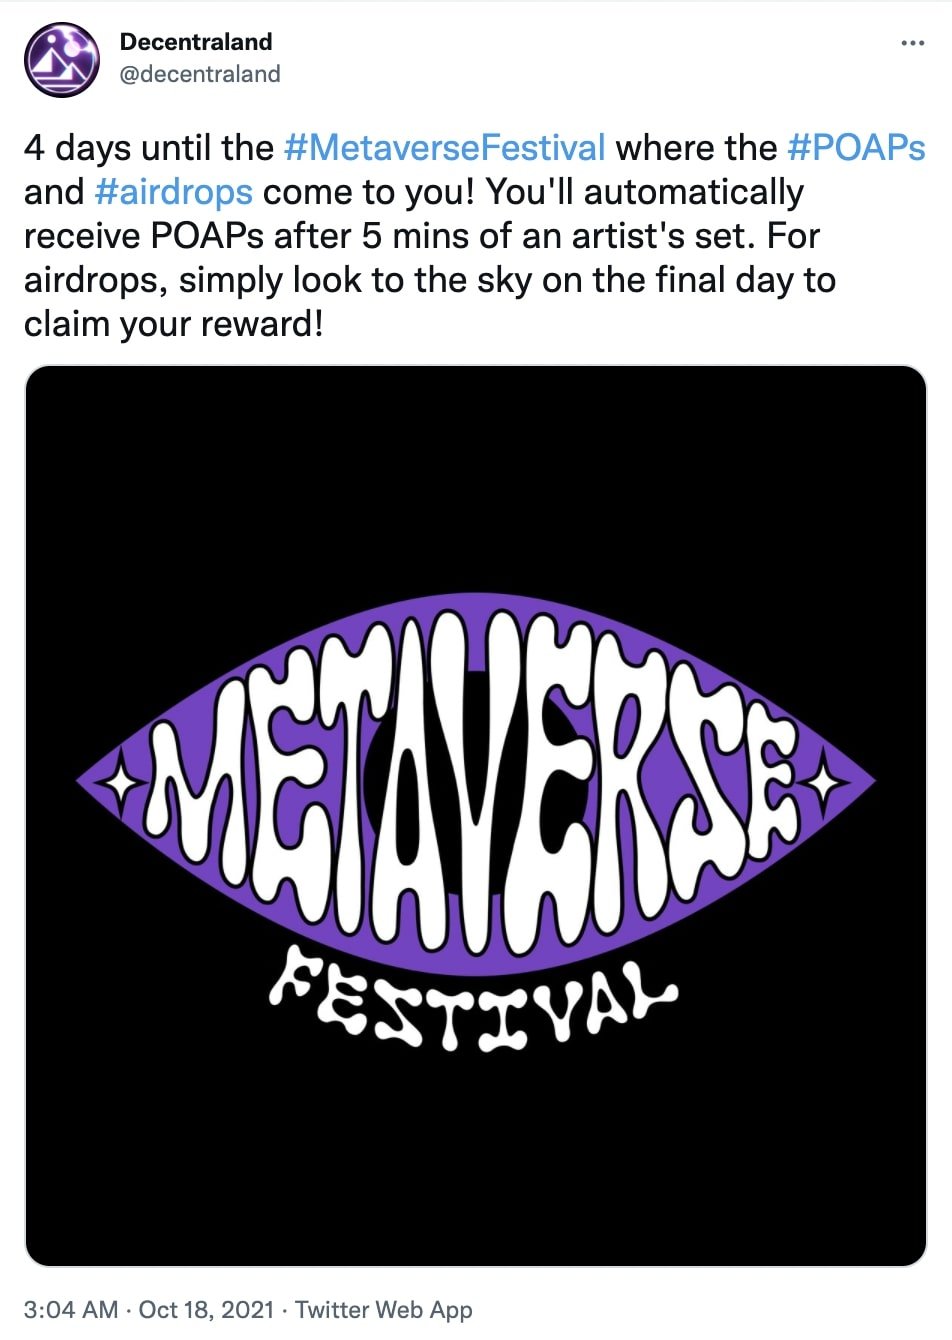 Decentraland tweet on metaverse festival